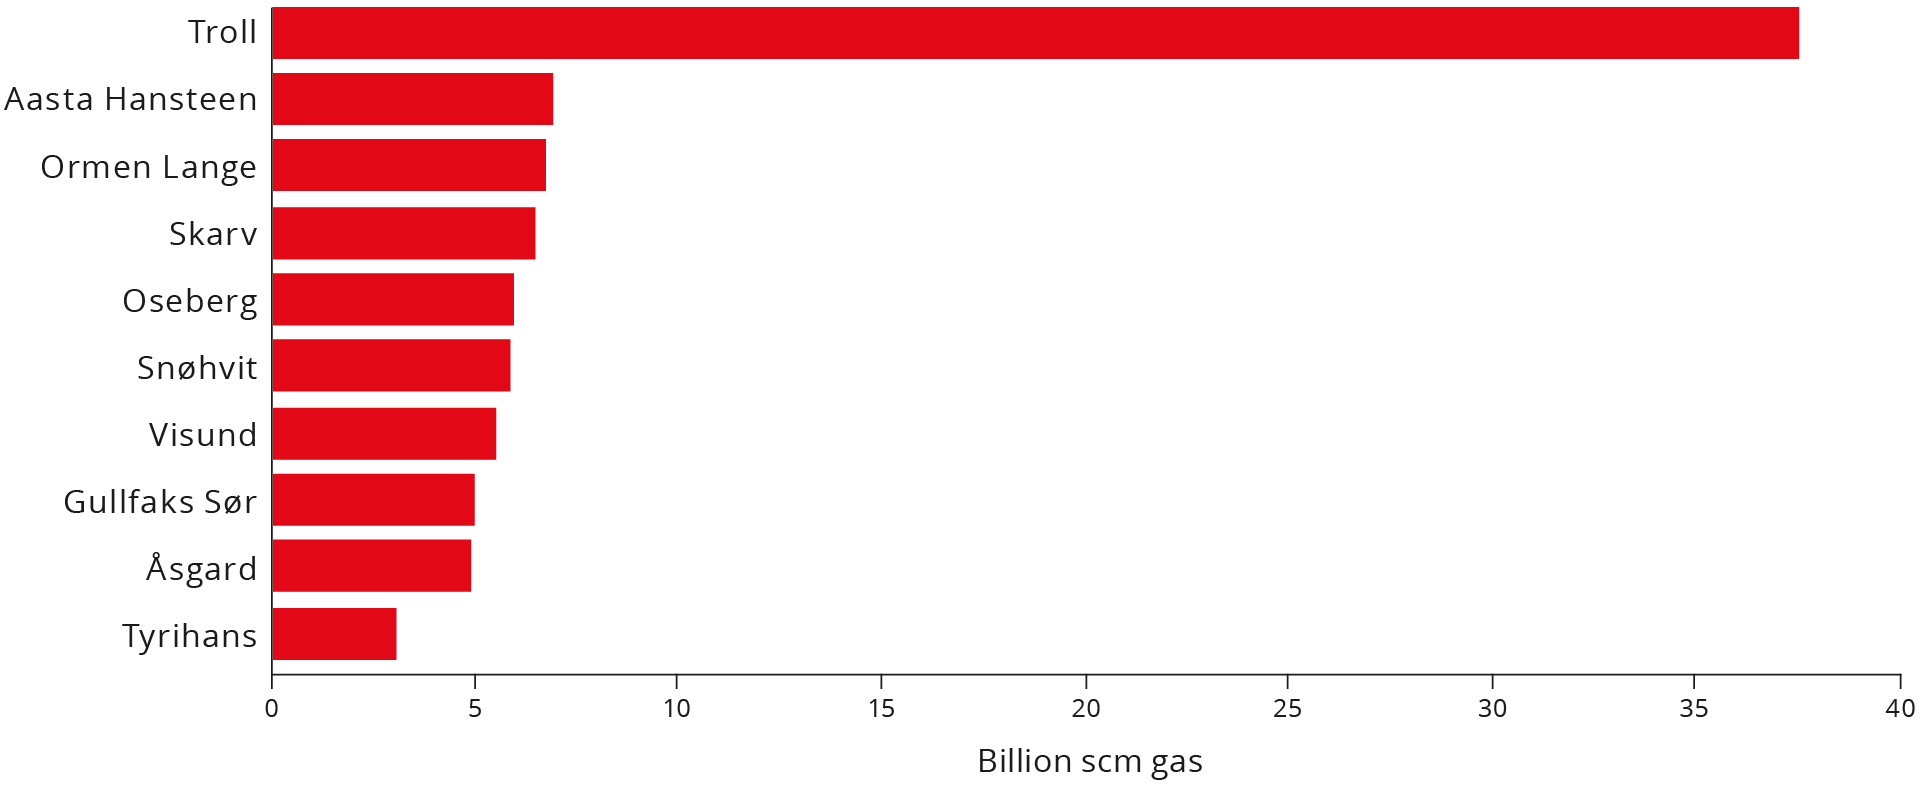 figure2-2-ten-largest-gasfields.png